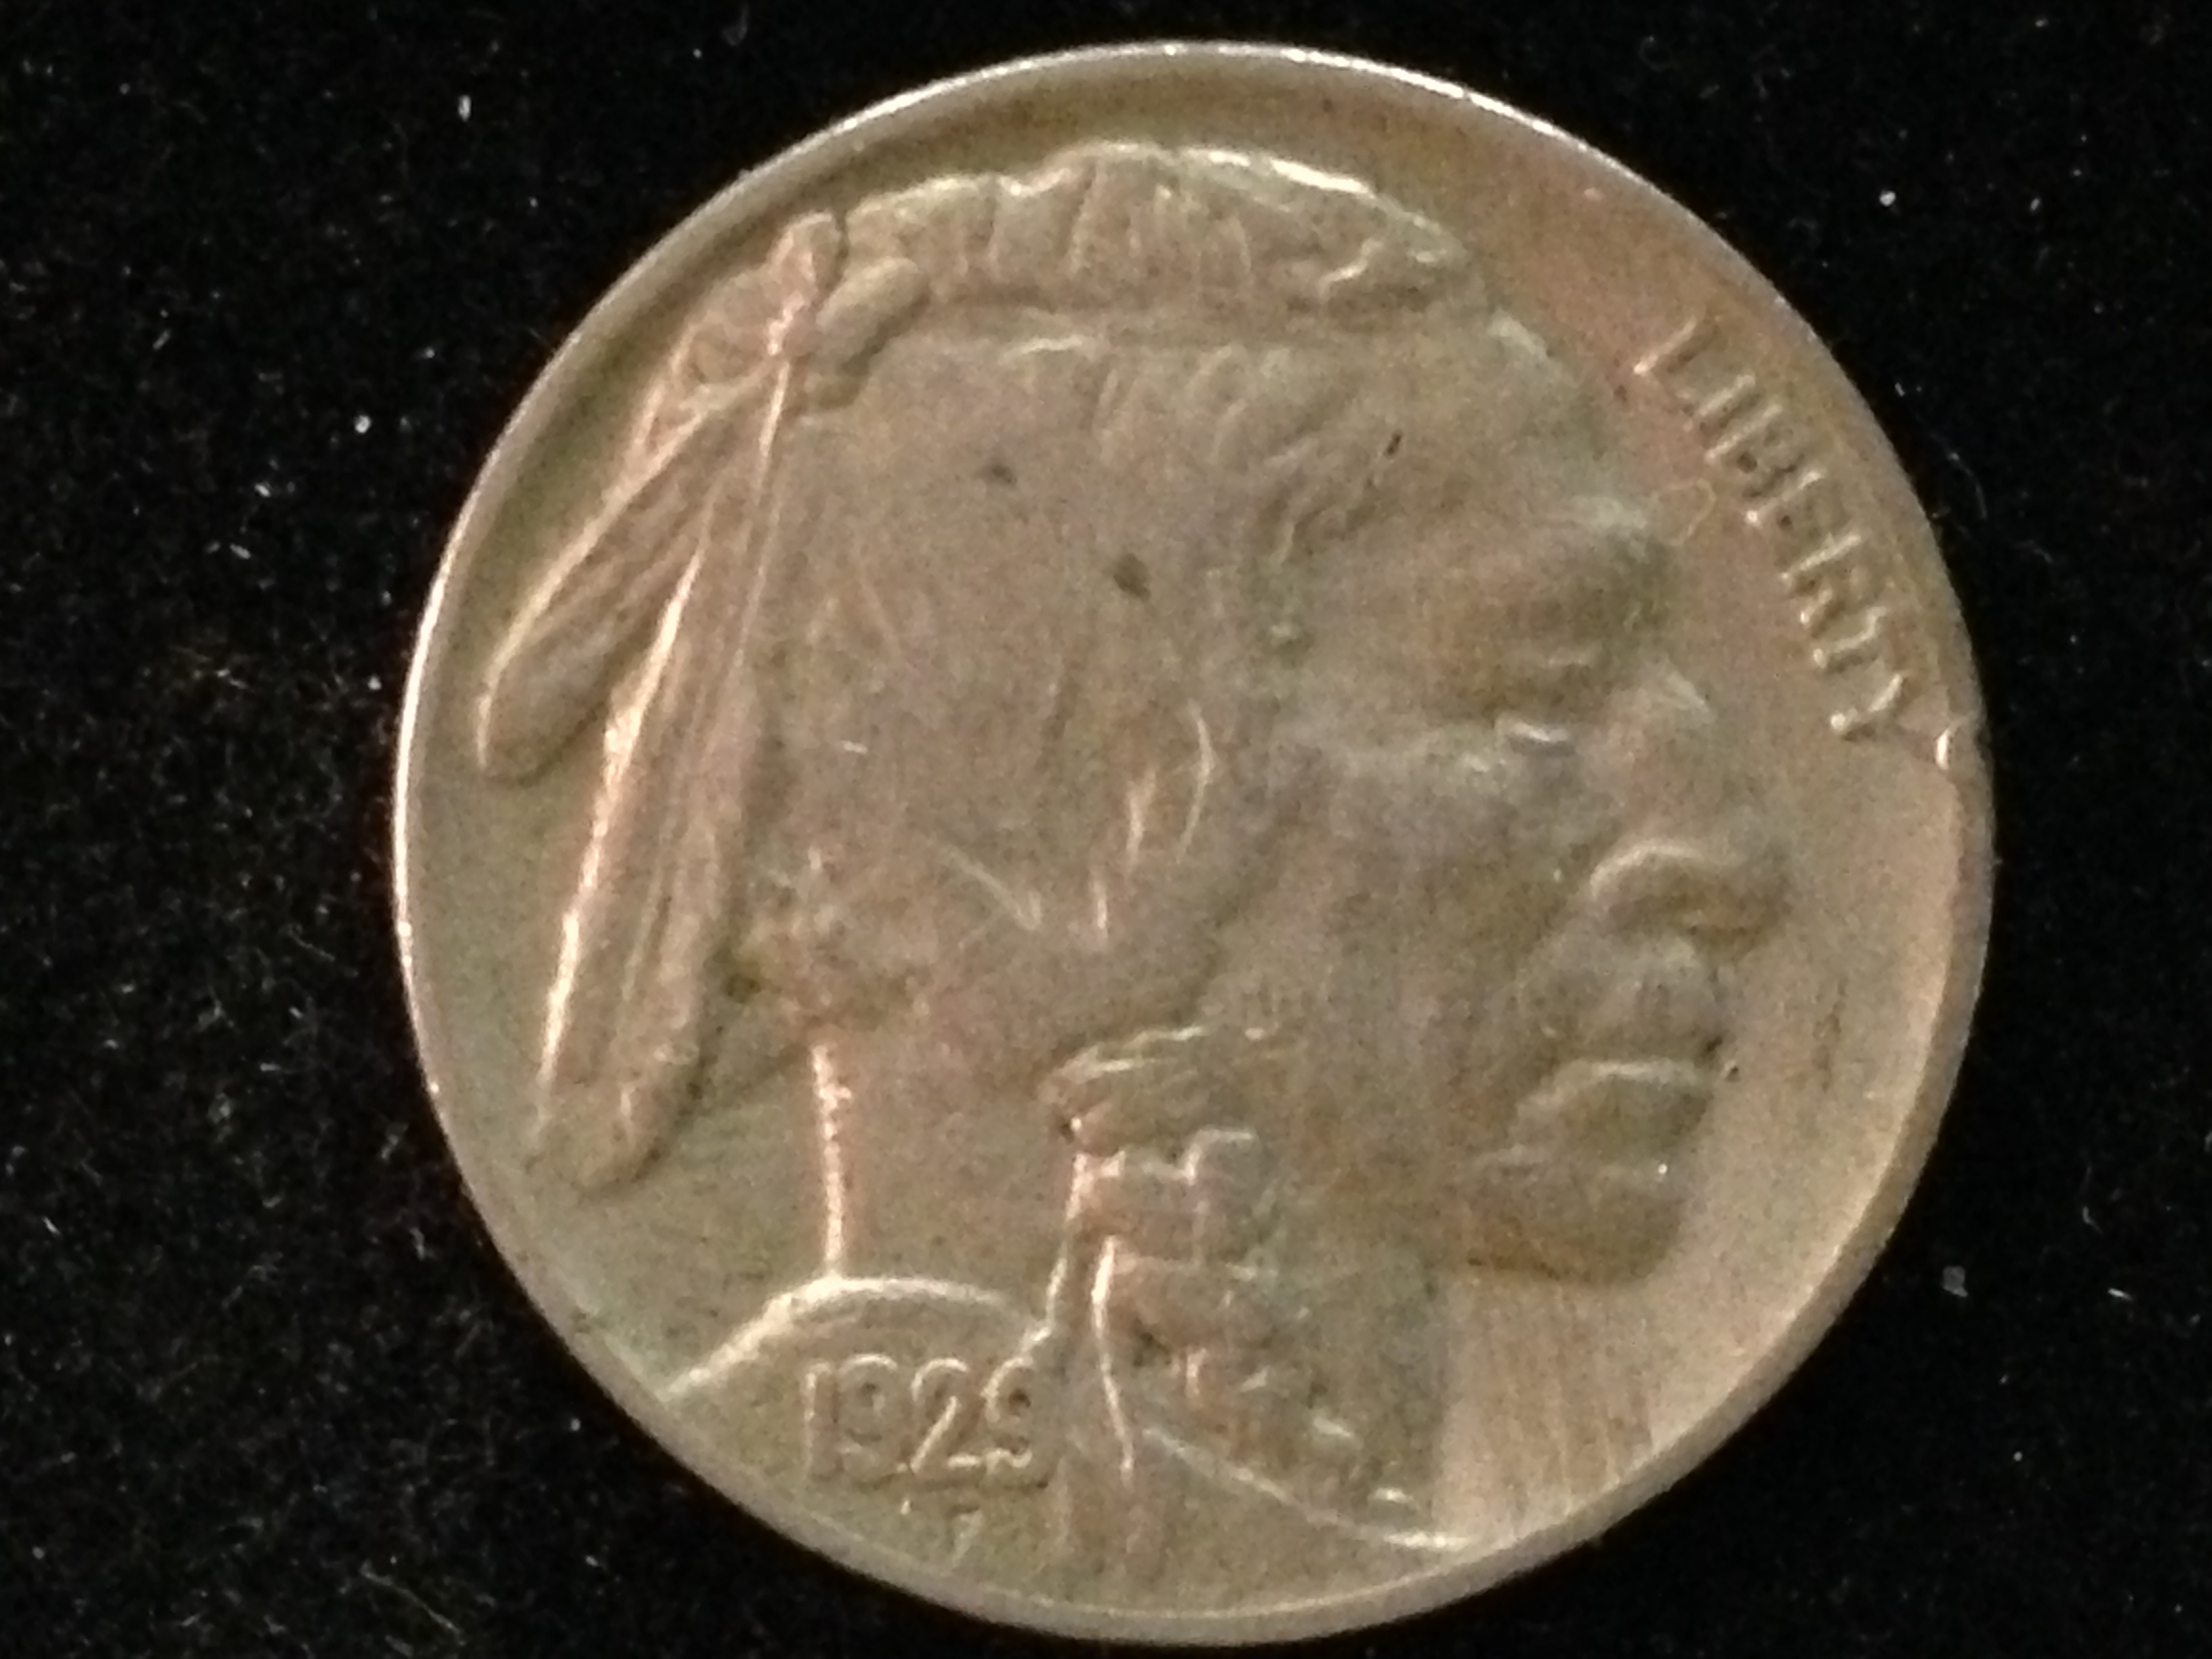 1929 buffalo nickel silver content